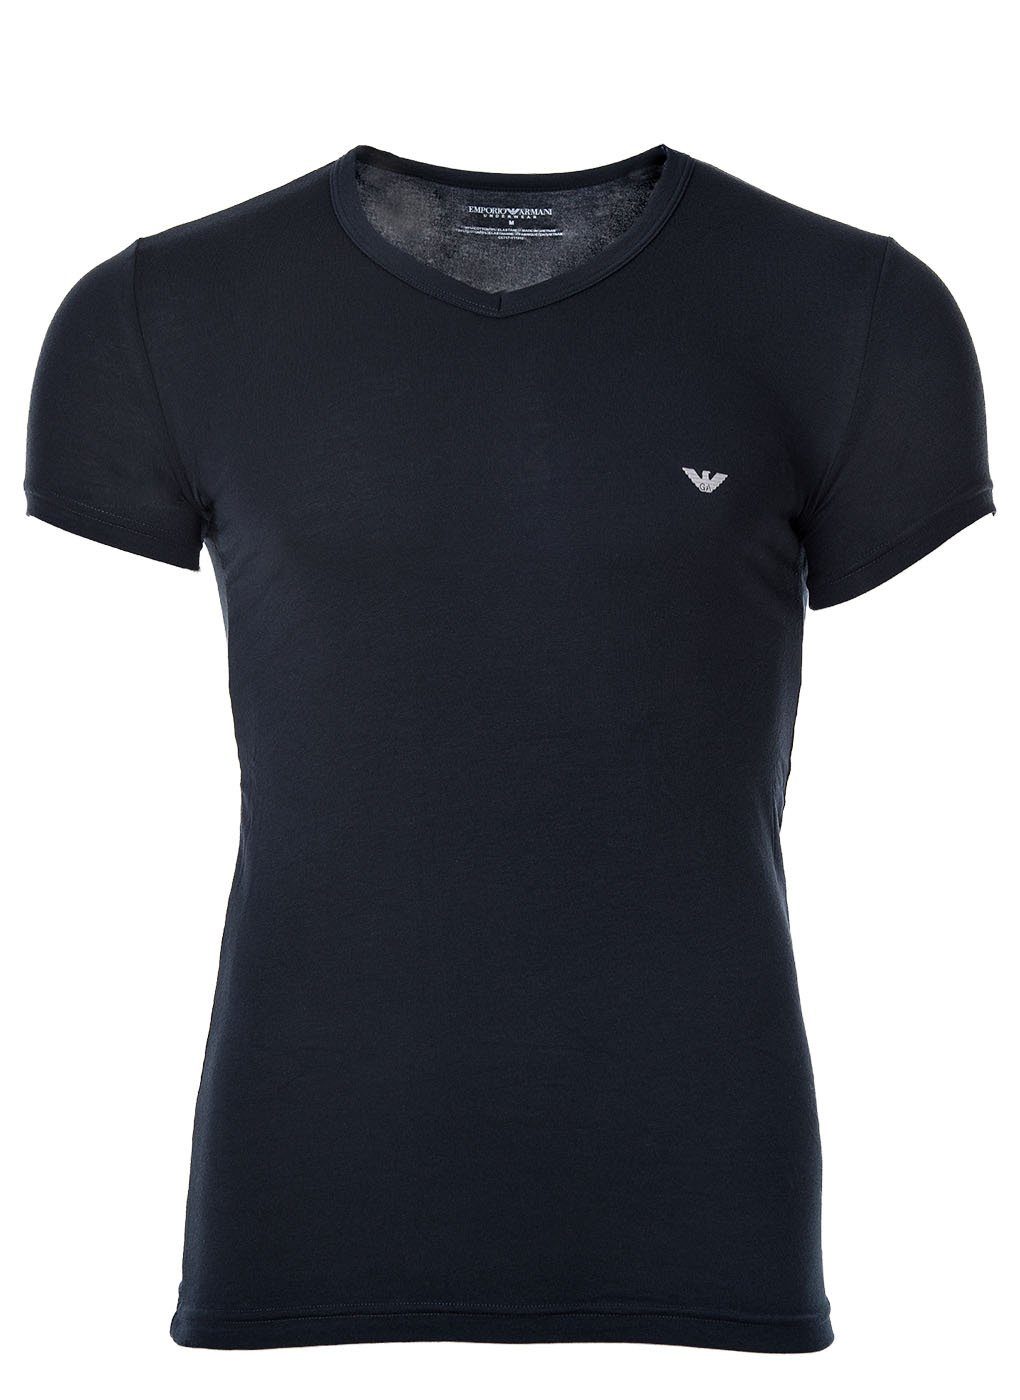 Emporio Armani T-Shirt 2er V-Ausschnitt - Herren T-Shirt V-Neck, Pack grau/marine